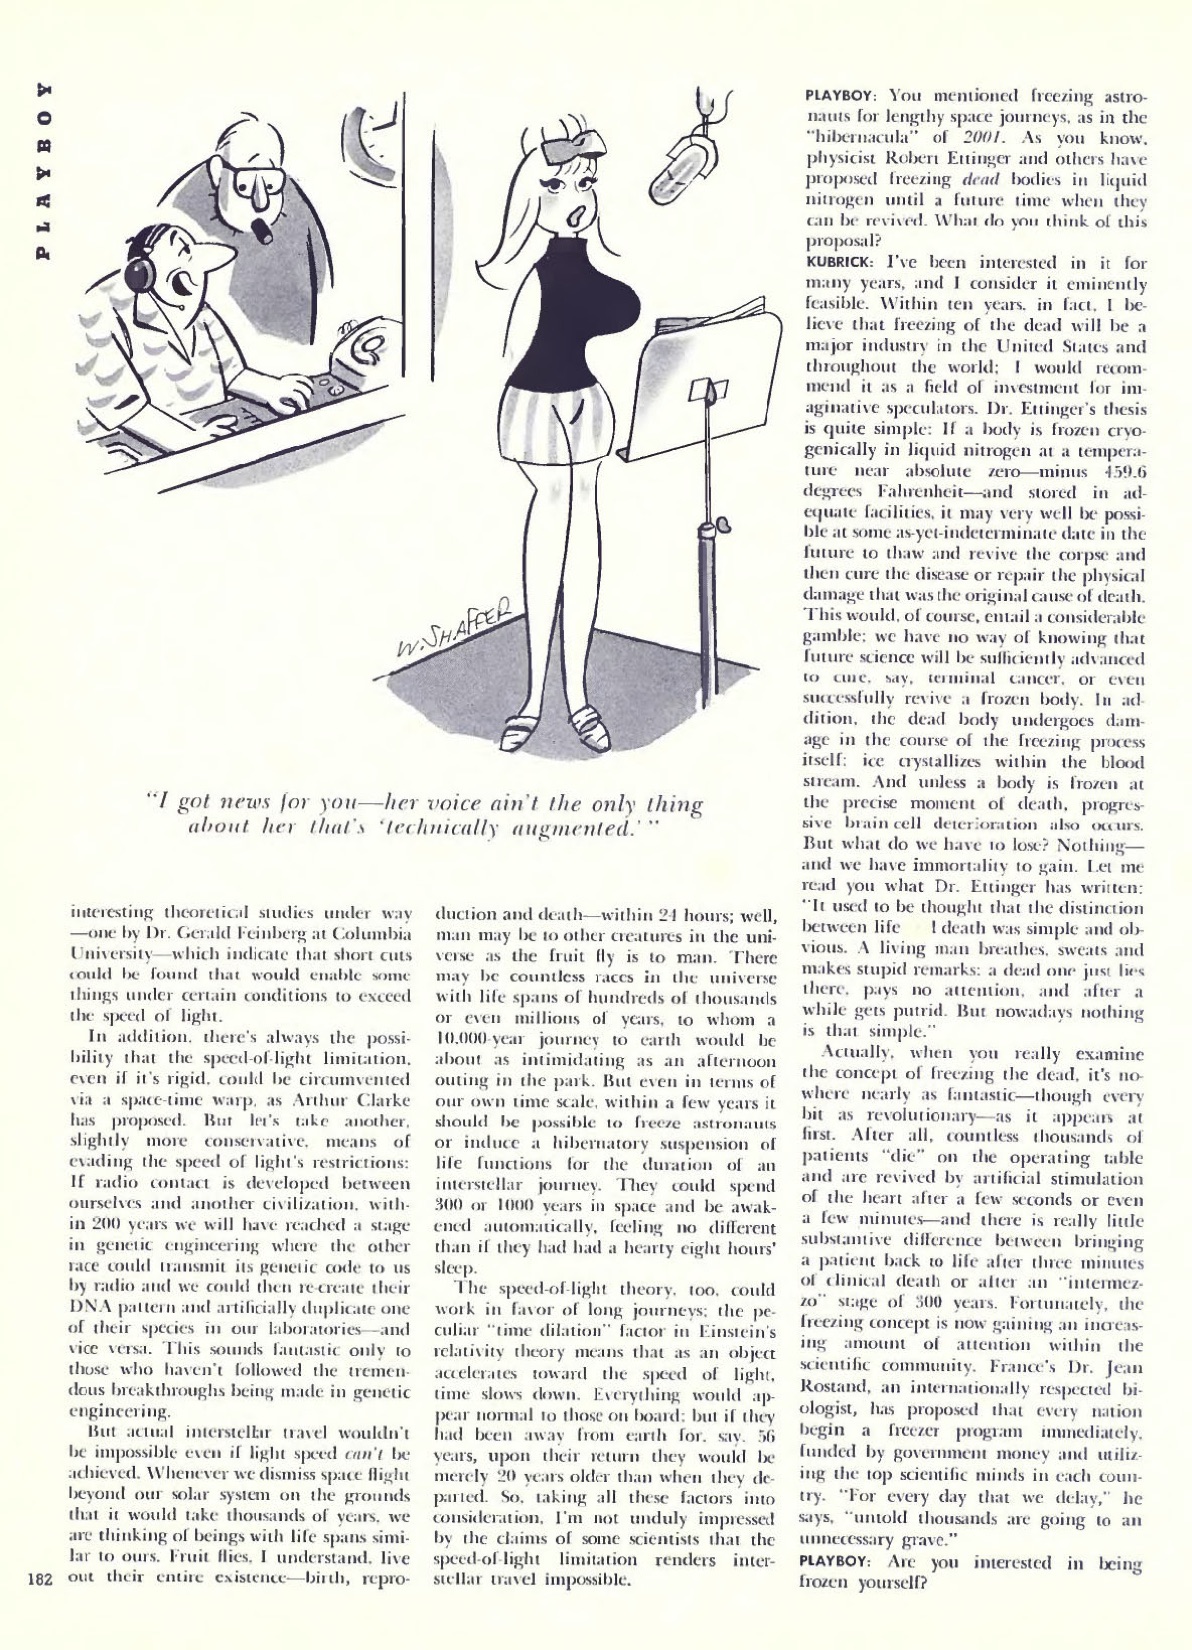 Playboy stanley kubrick 1968 interview